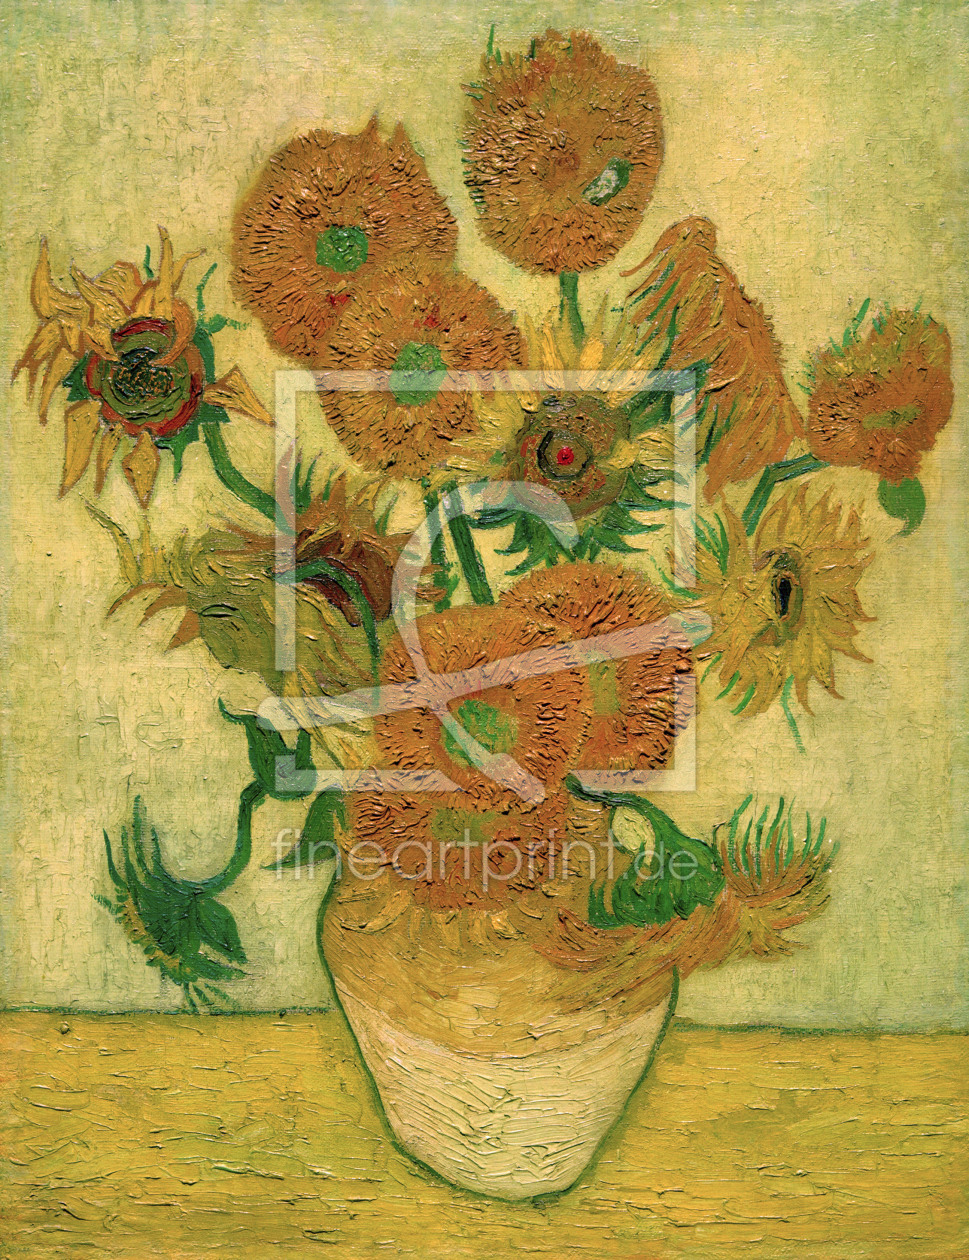 Bild-Nr.: 30003182 V.van Gogh, Sunflowers / 1889 erstellt von van Gogh, Vincent